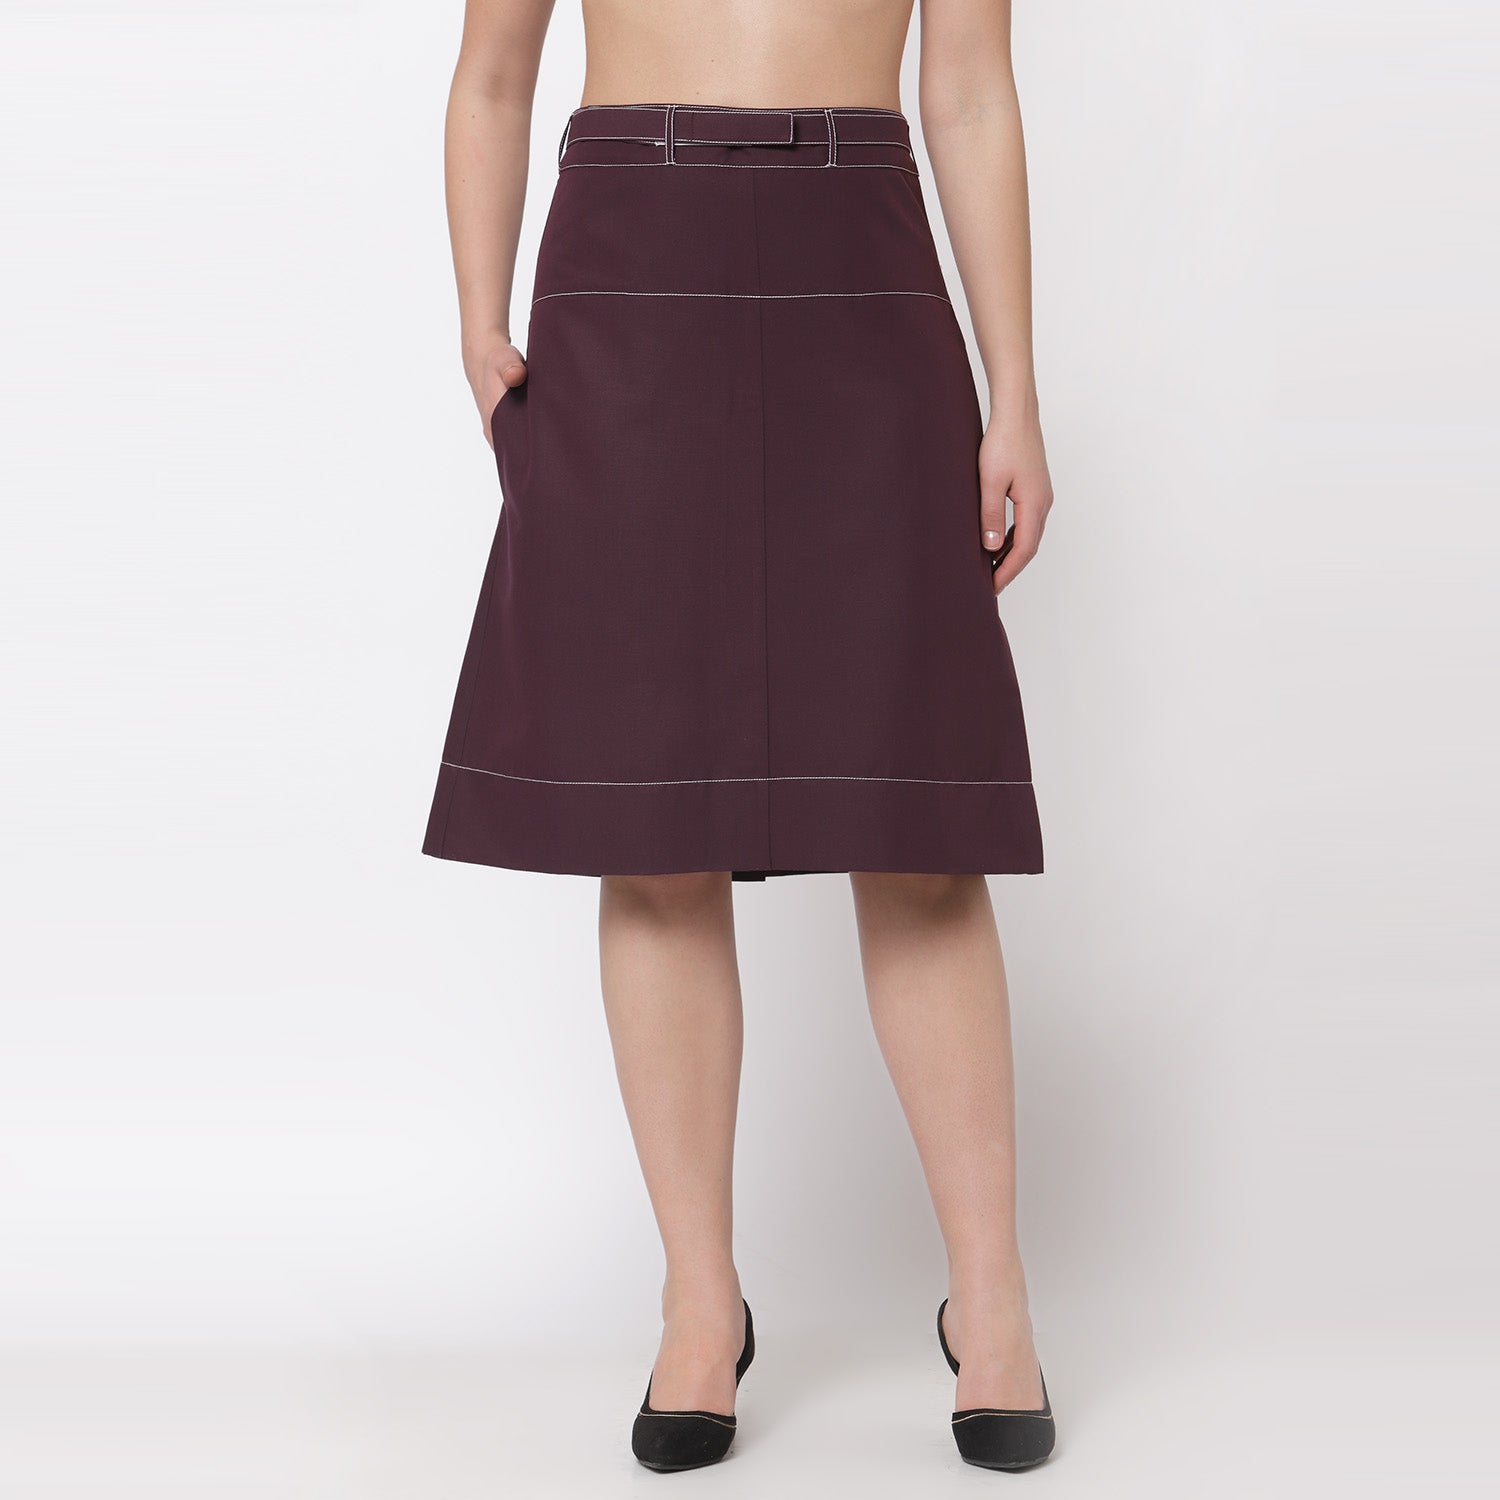 Purple Skirt With Grey Top Stitch